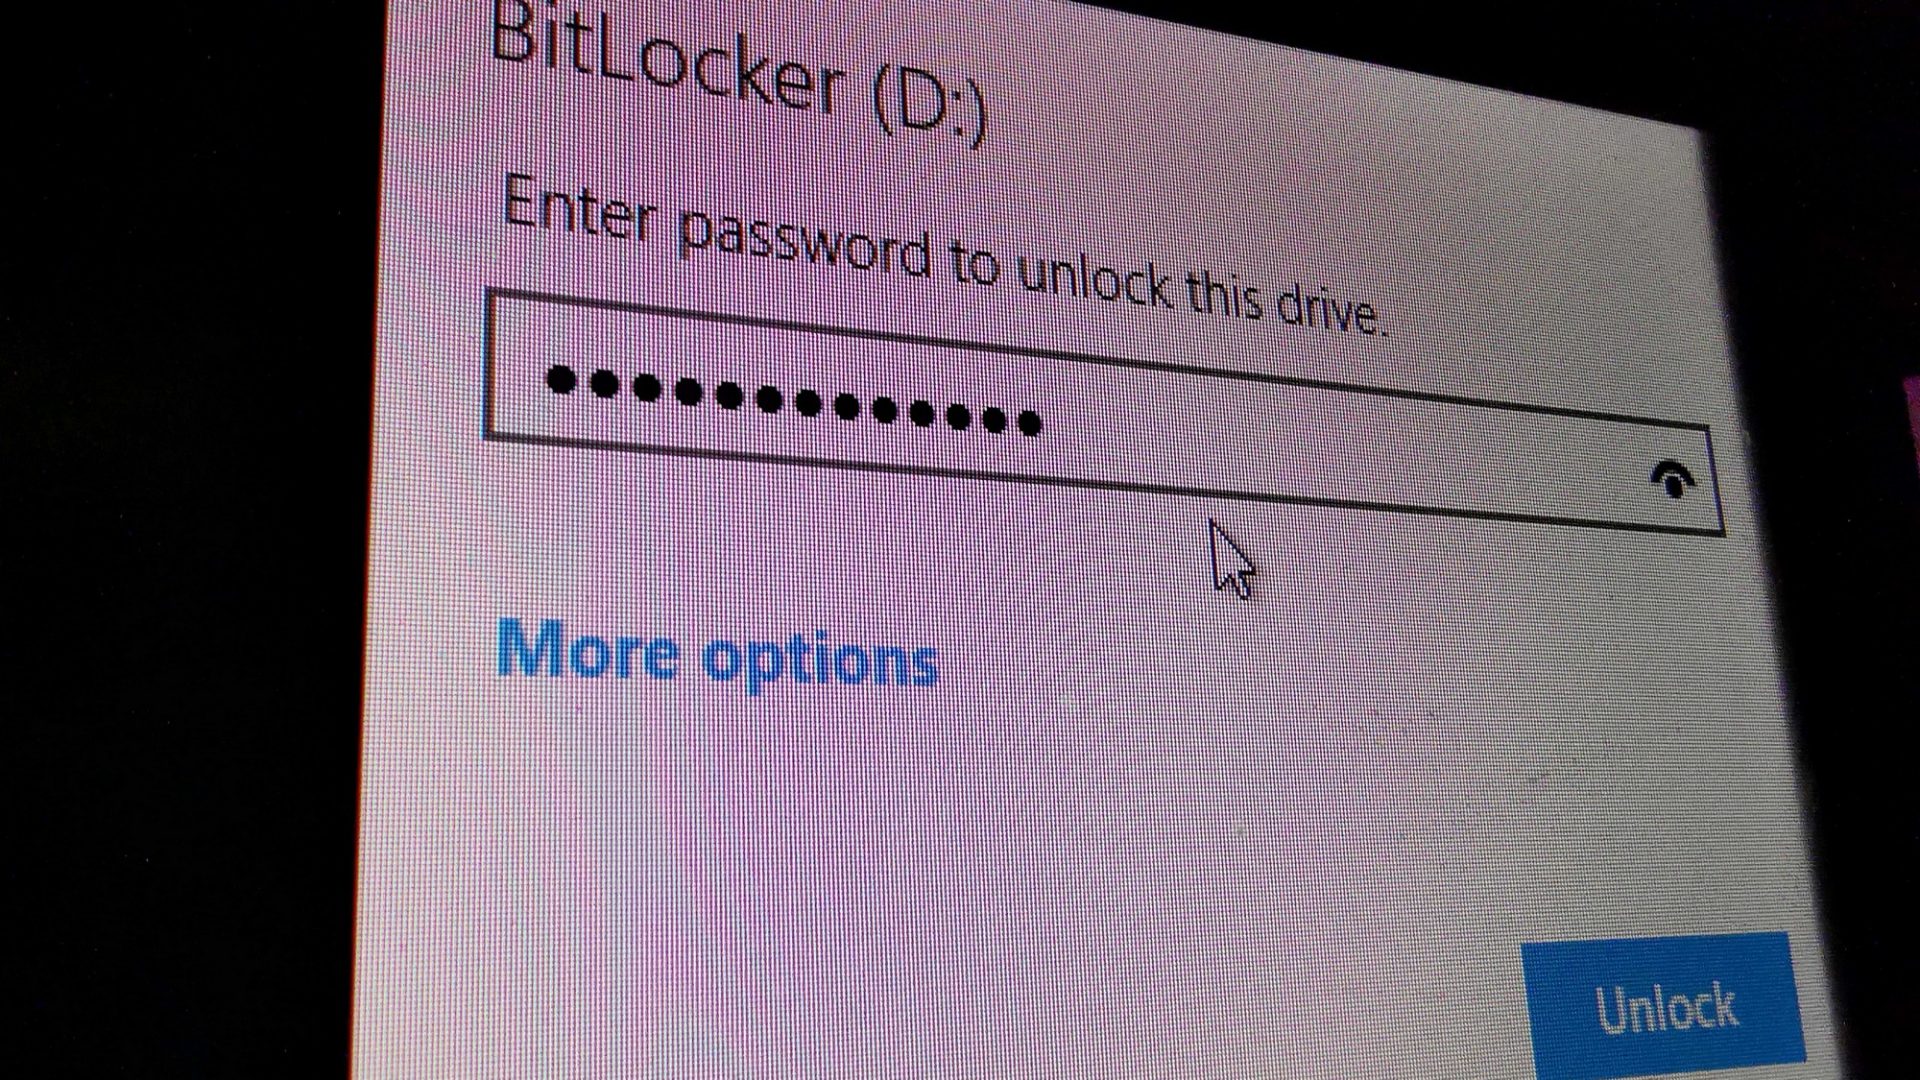 how to unlock bitlocker without password in windows 10